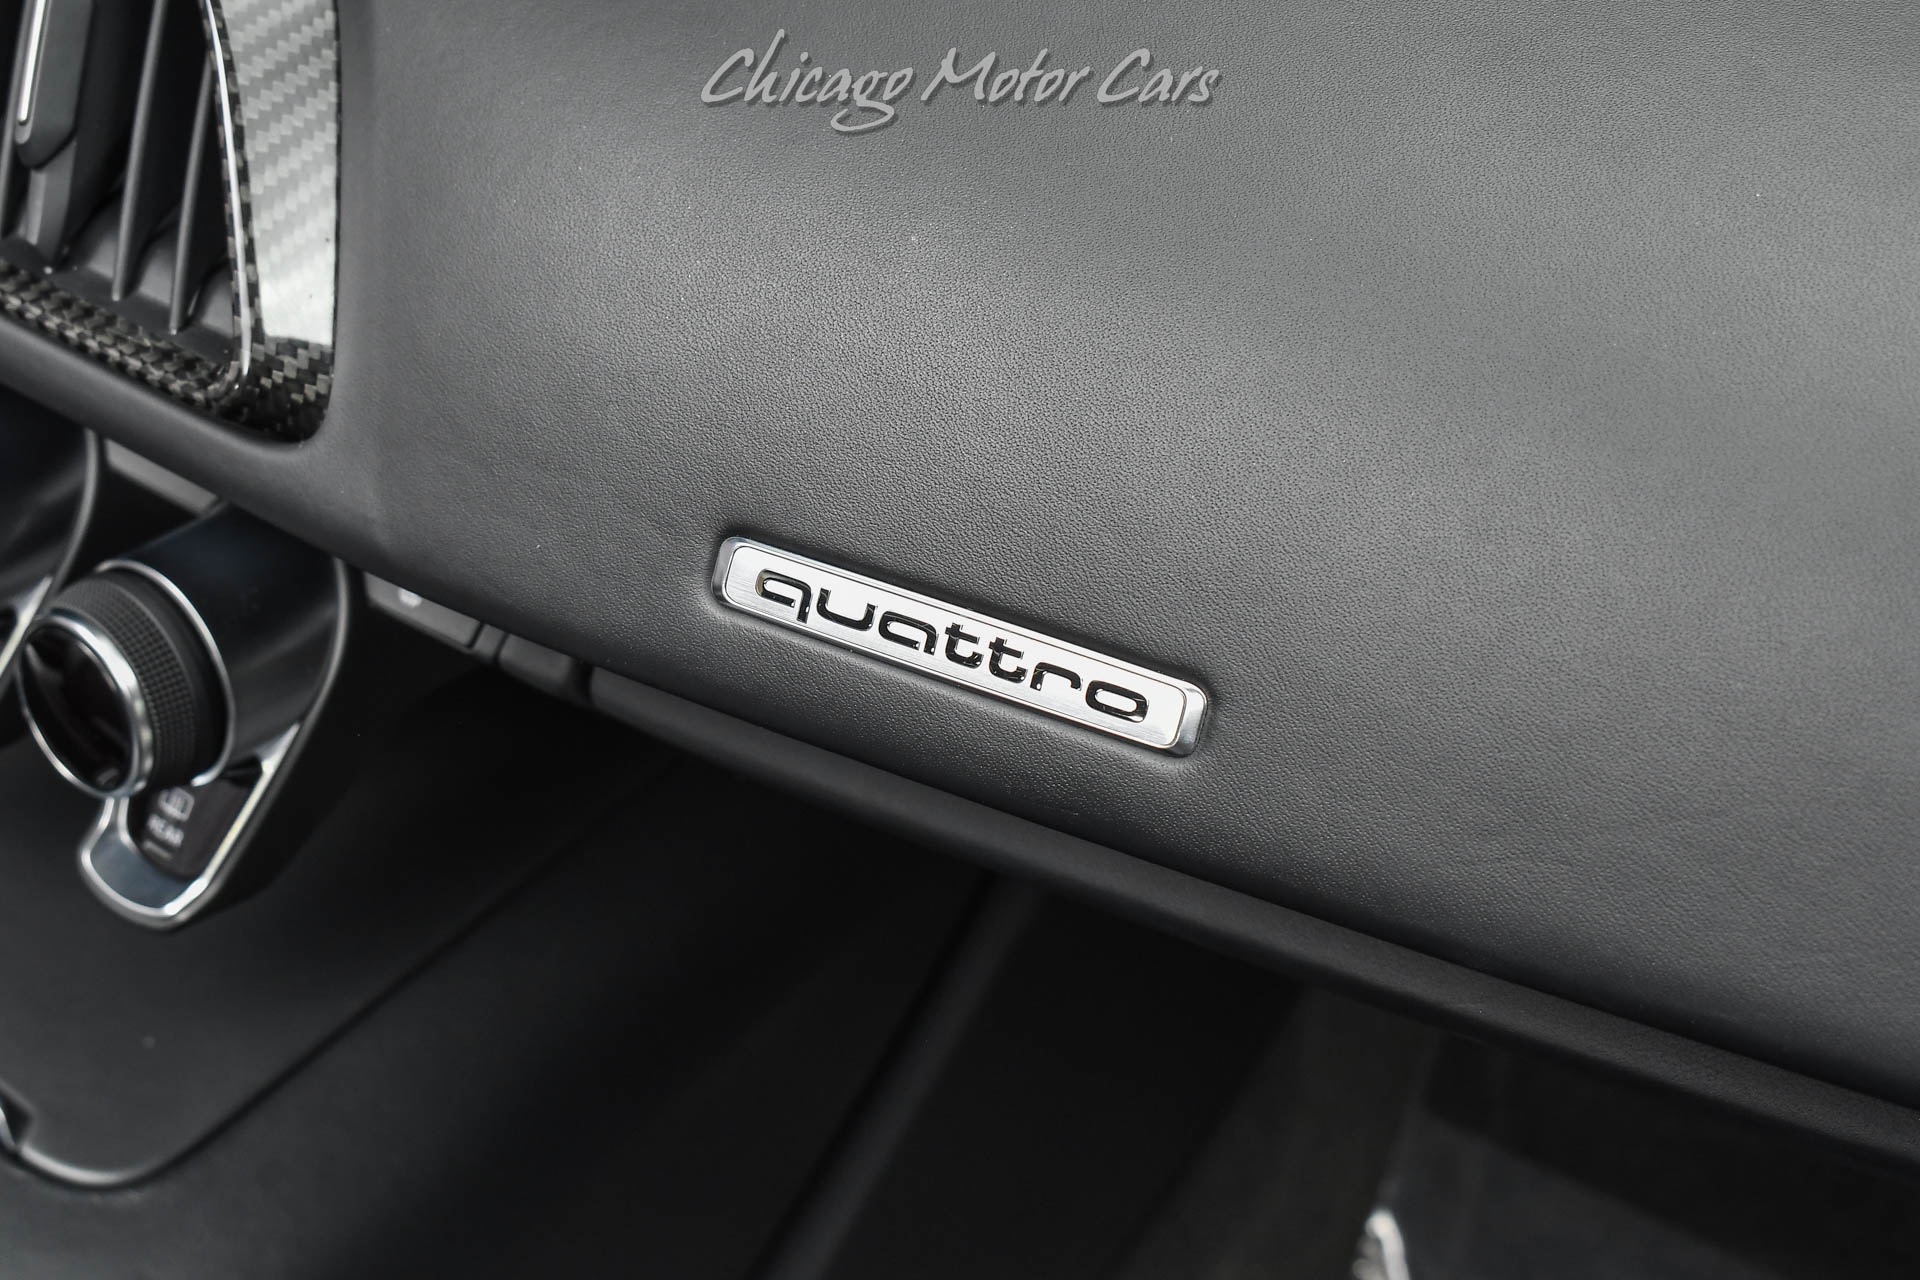 Used-2017-Audi-R8-52-quattro-V10-Spyder-Suzuka-Grey-BOTH-CARBON-PACKS-Full-Leather-Pkg